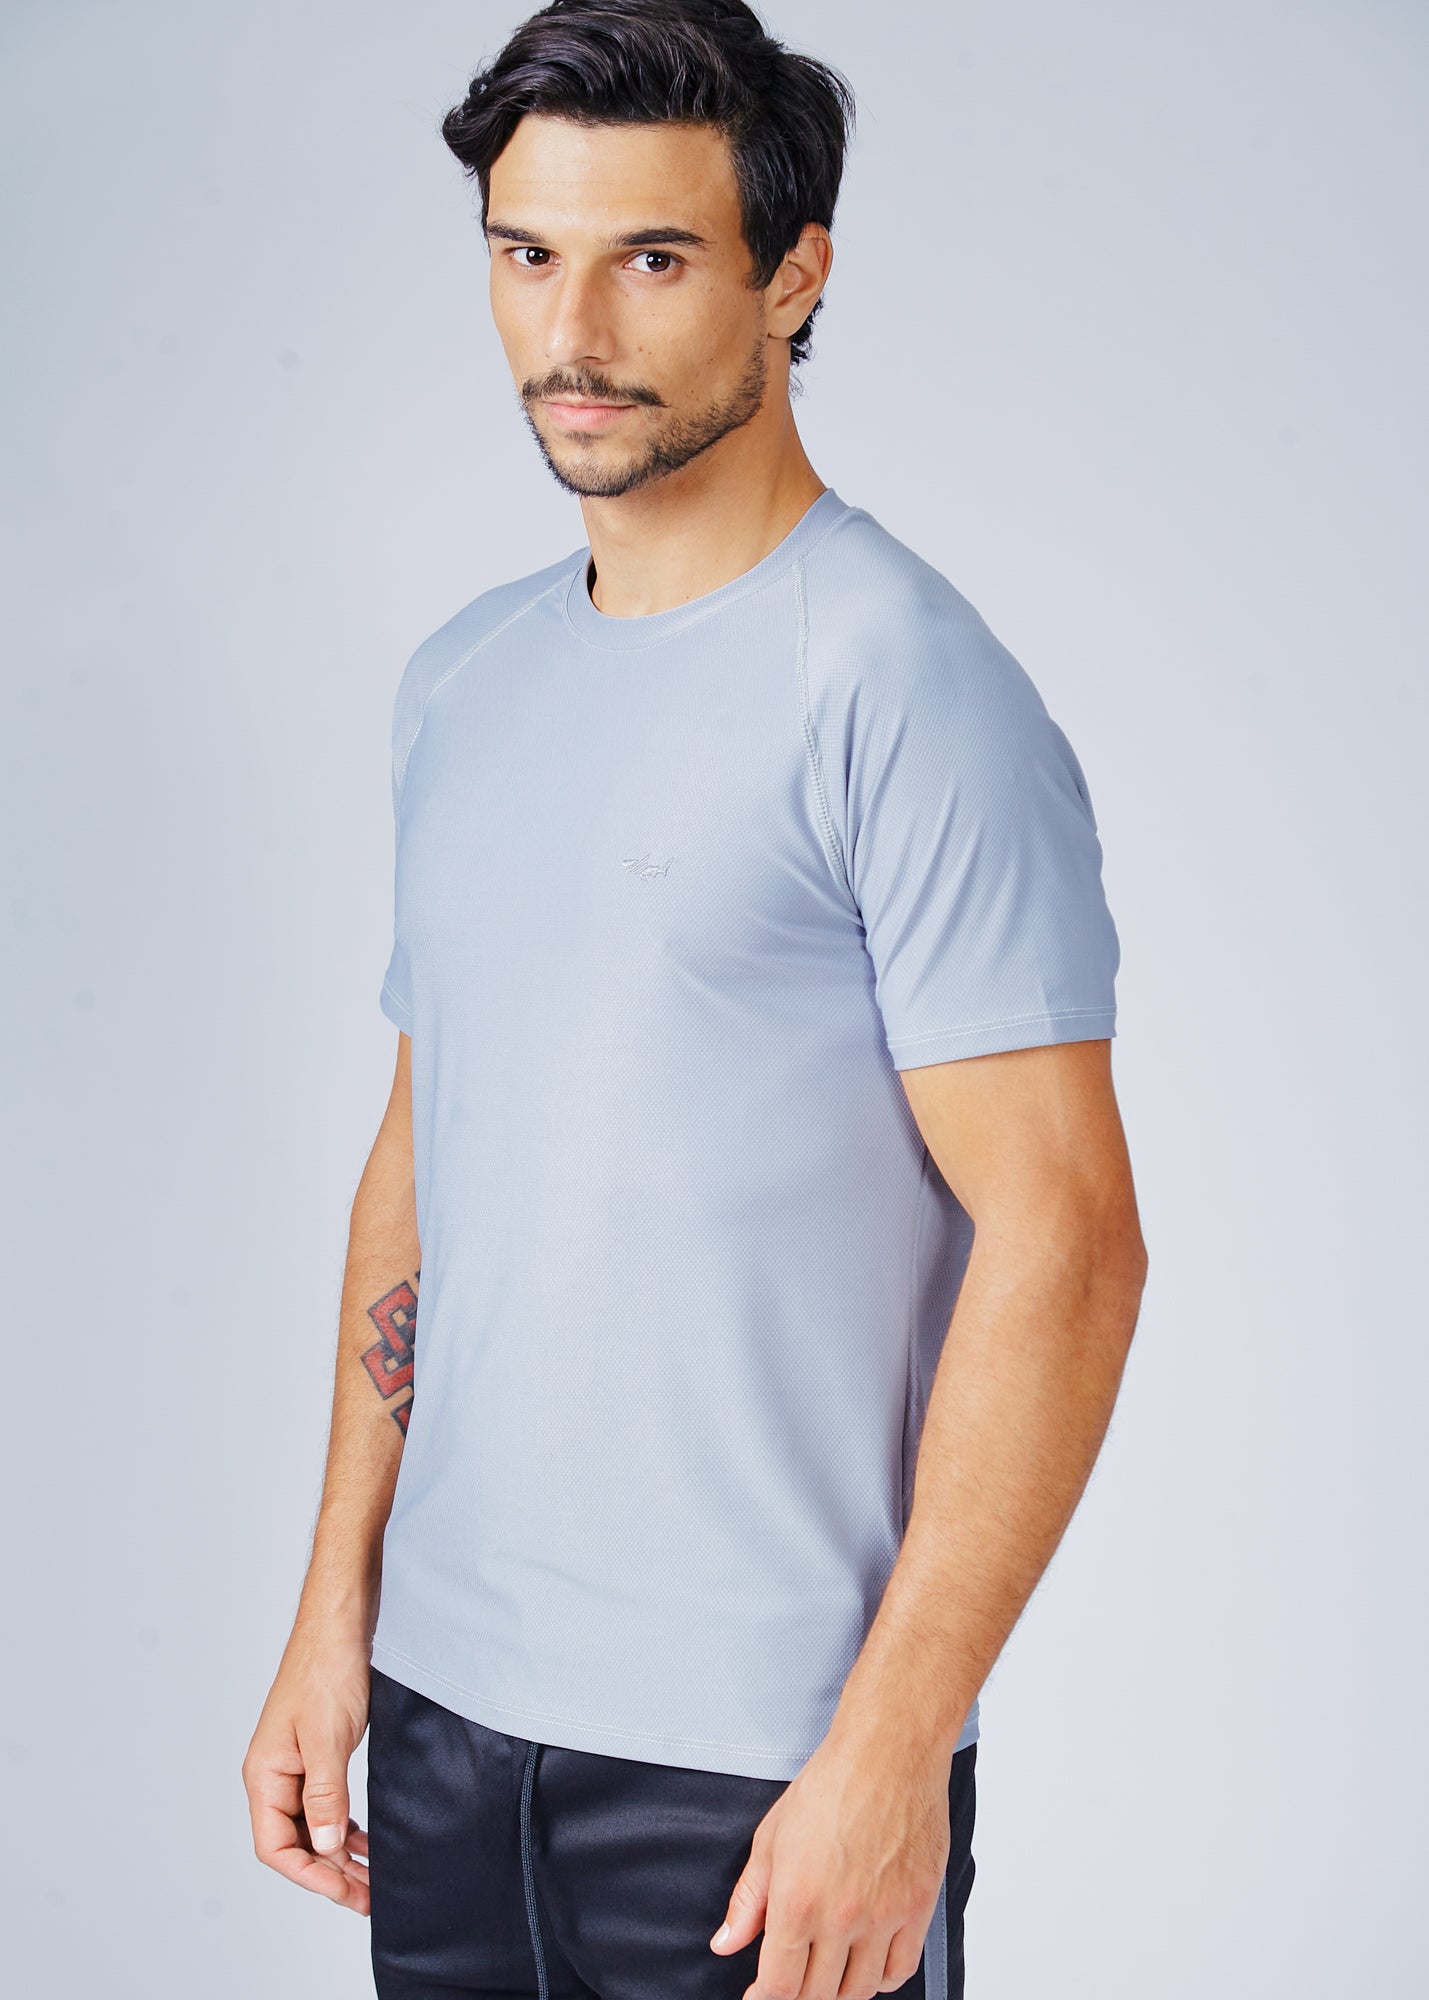 Camiseta Slim Dry Fit - Cinza